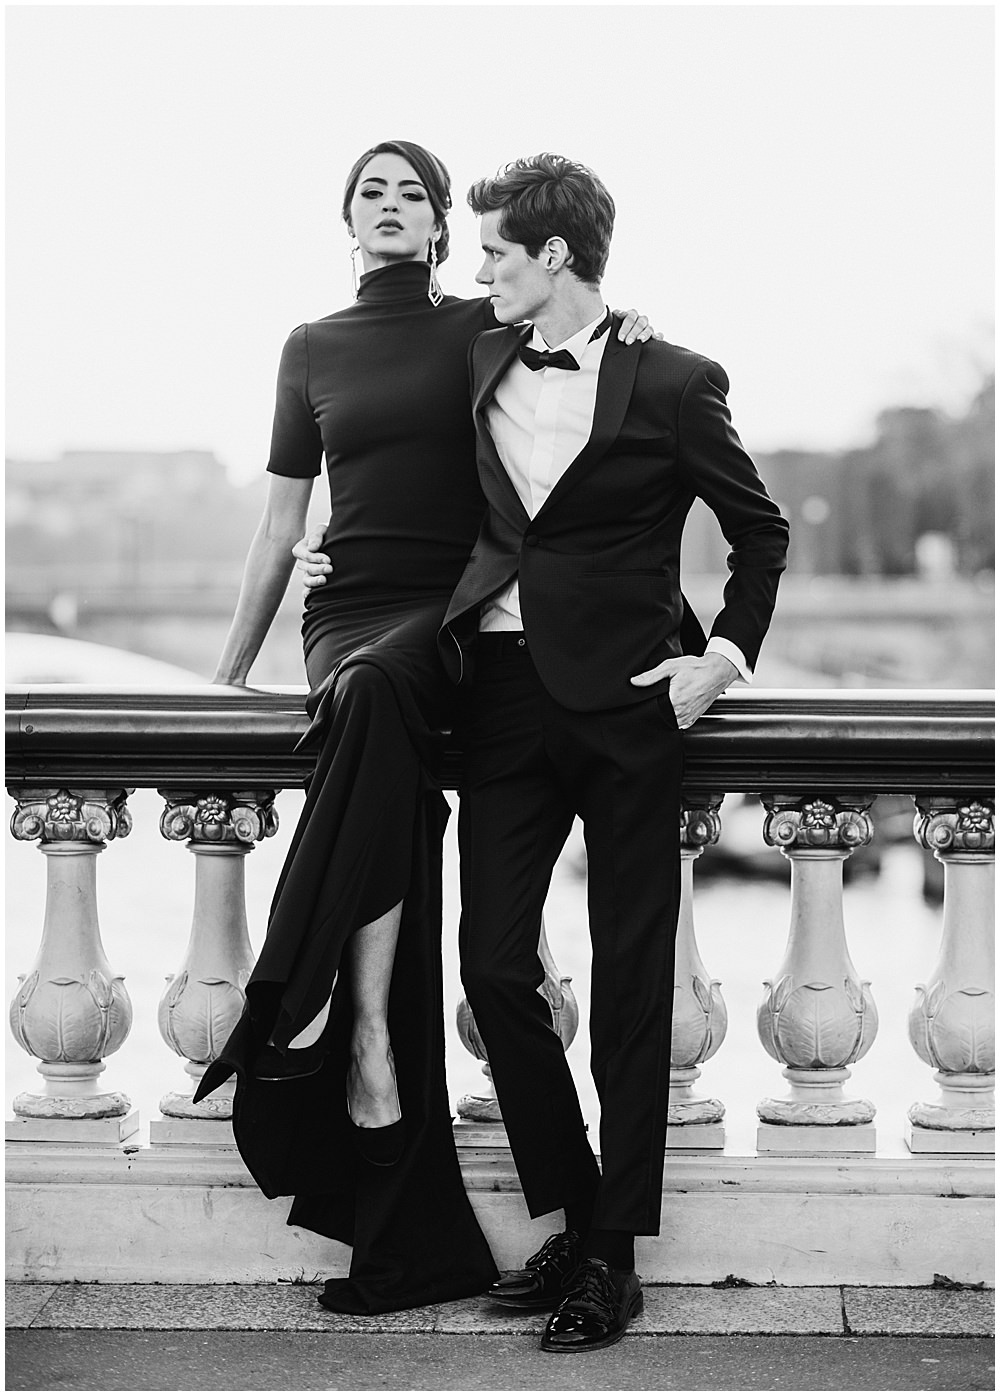 Top 10 Paris Wedding Photography Locations, Pont Alexandre III, Paris photographer, elopement photographer paris, elopement paris pictures, 